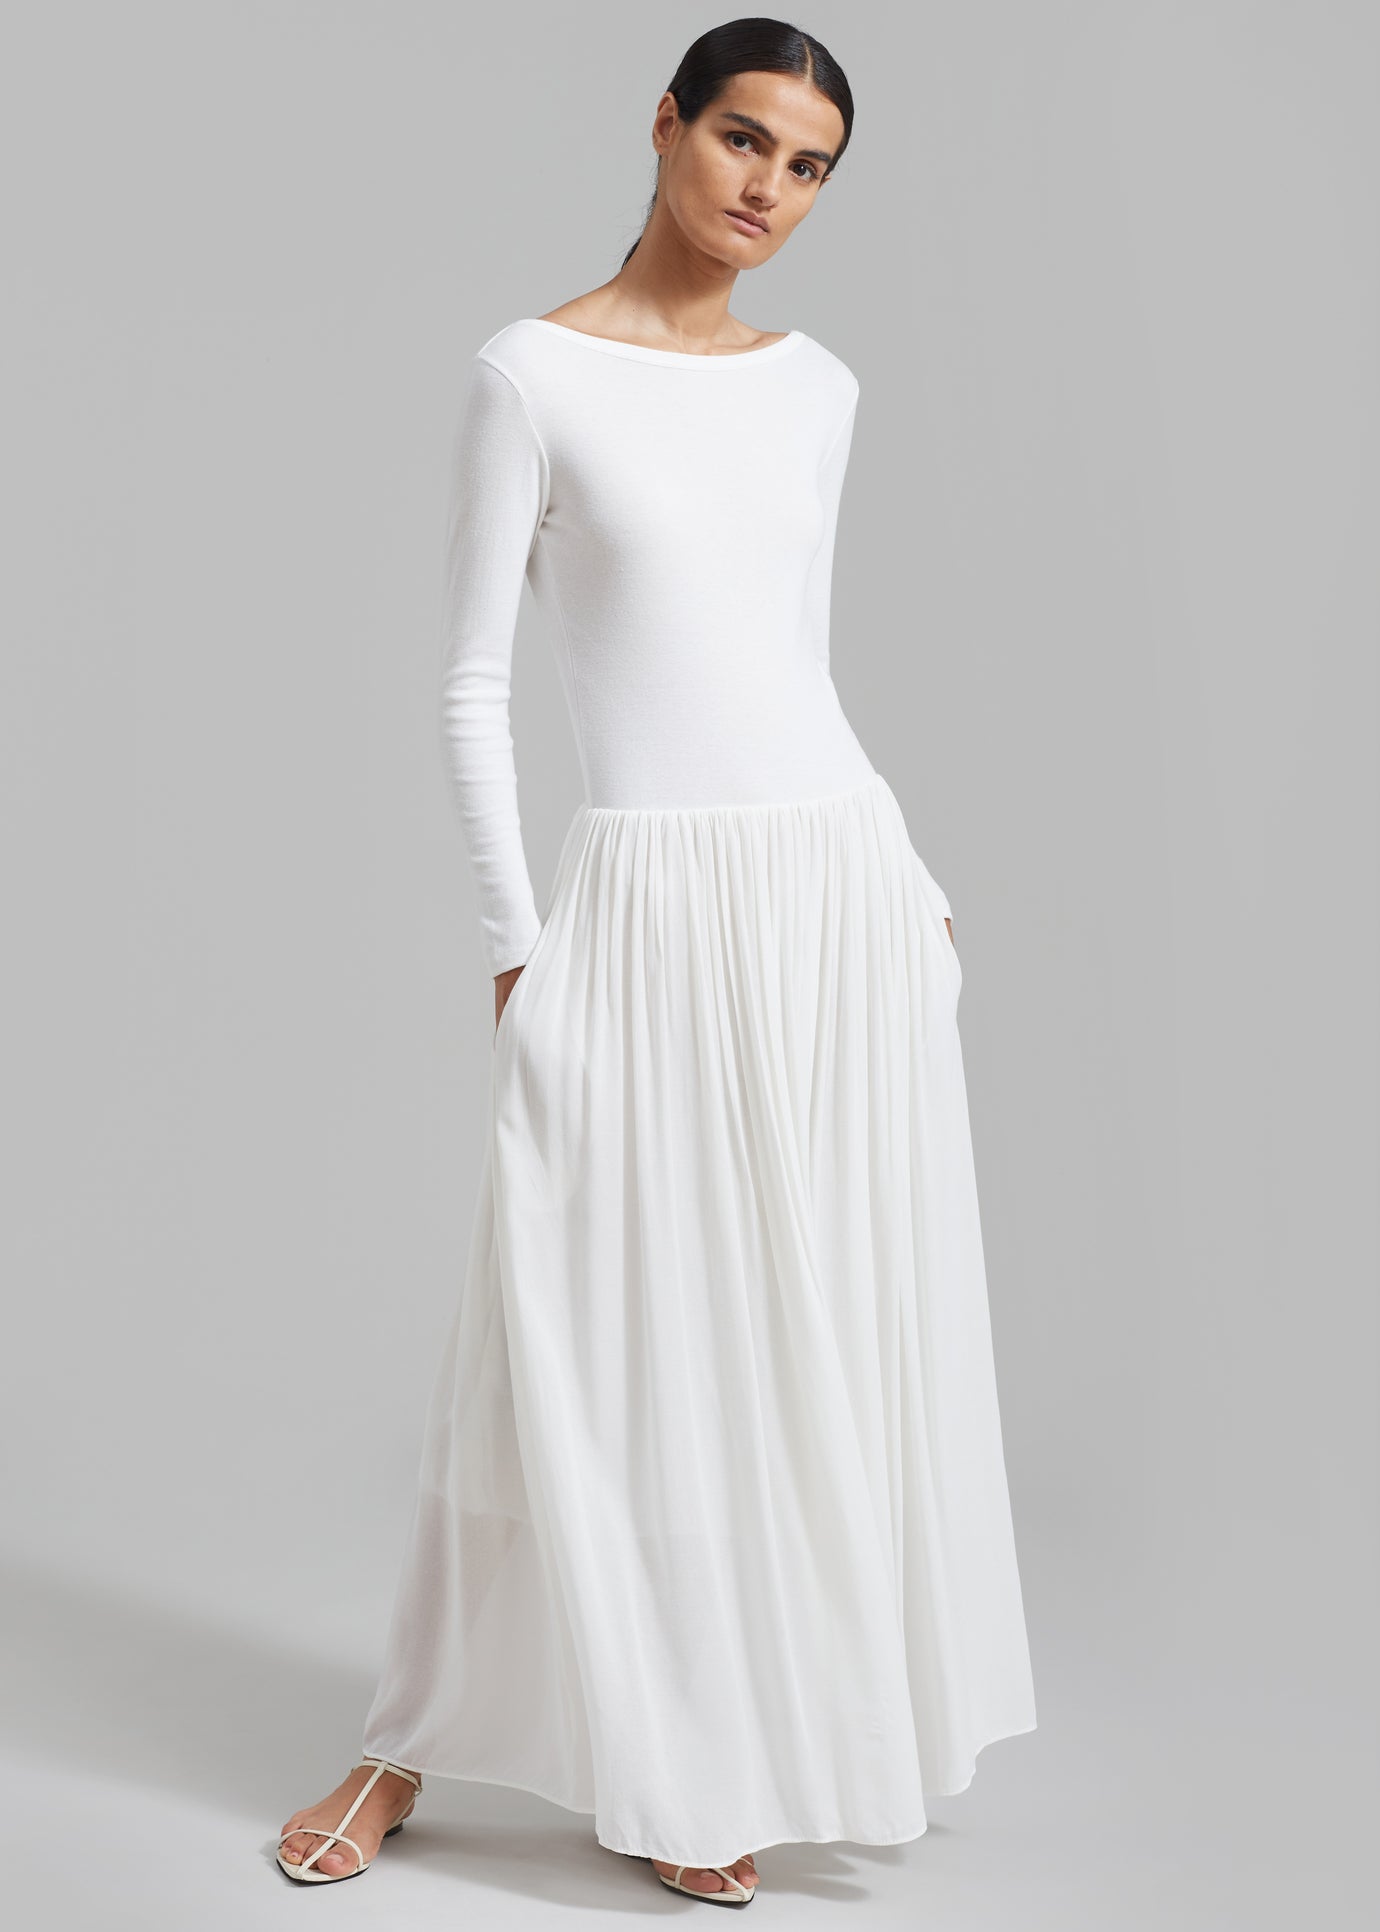 Odette Gathered Skirt Maxi Dress - White - 1